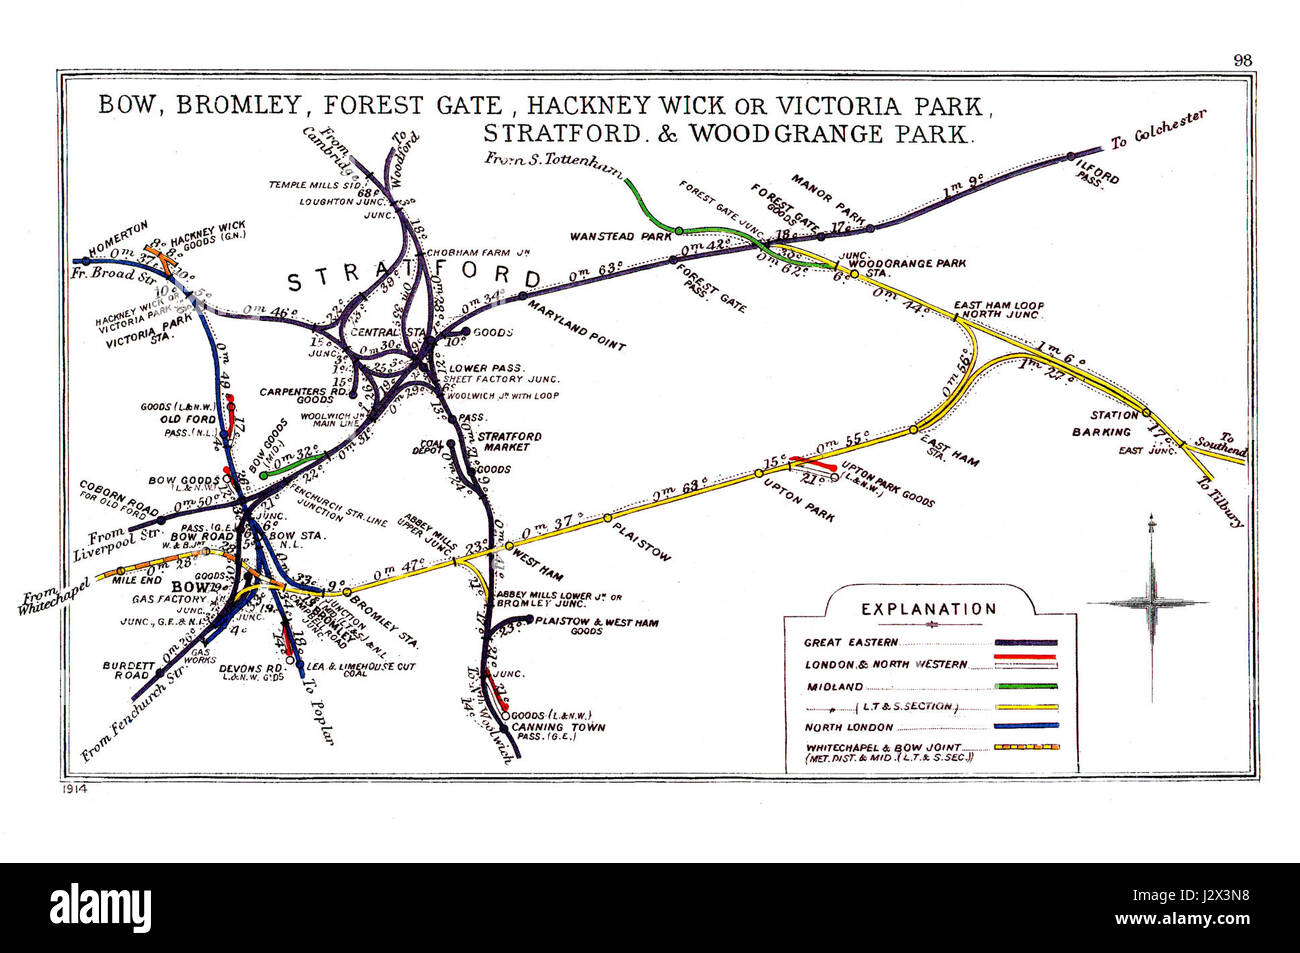 Bow, Bromley, Firest Gate, hackney stoppino o Victoria Park, Stratford & Woodgrange Park RJD 98 Foto Stock